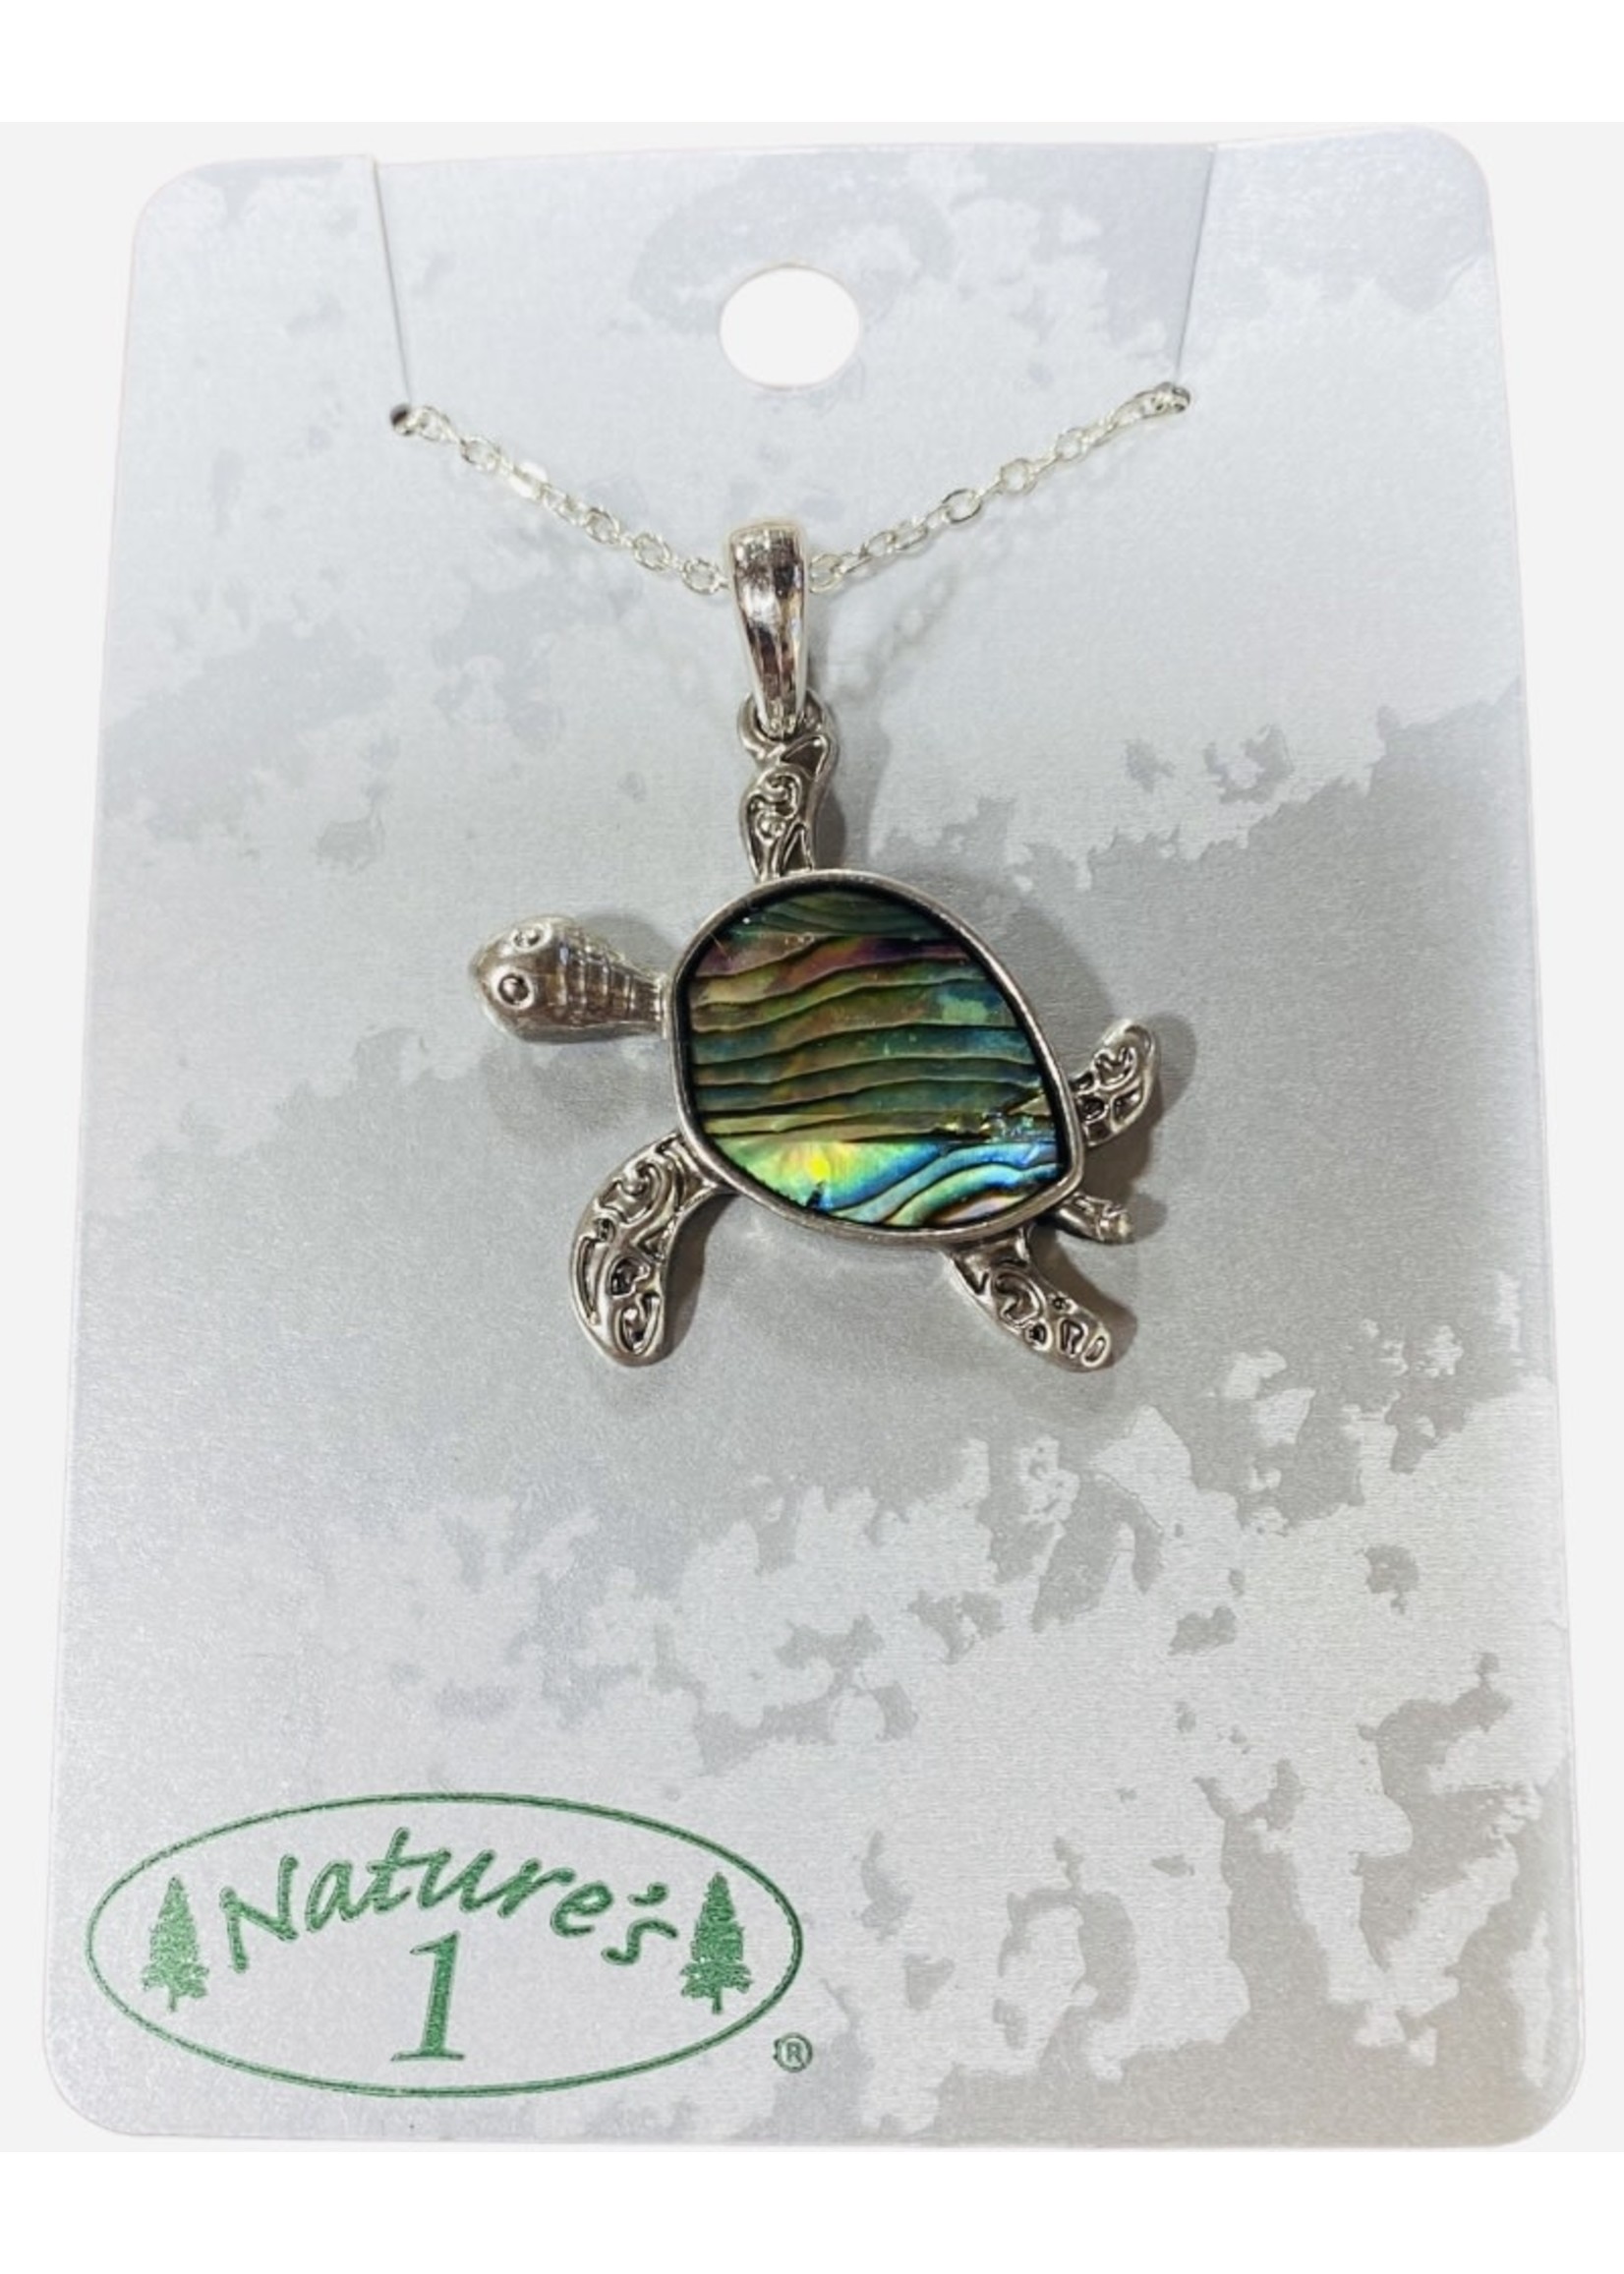 Nature's 1 (Turtle Pendant)